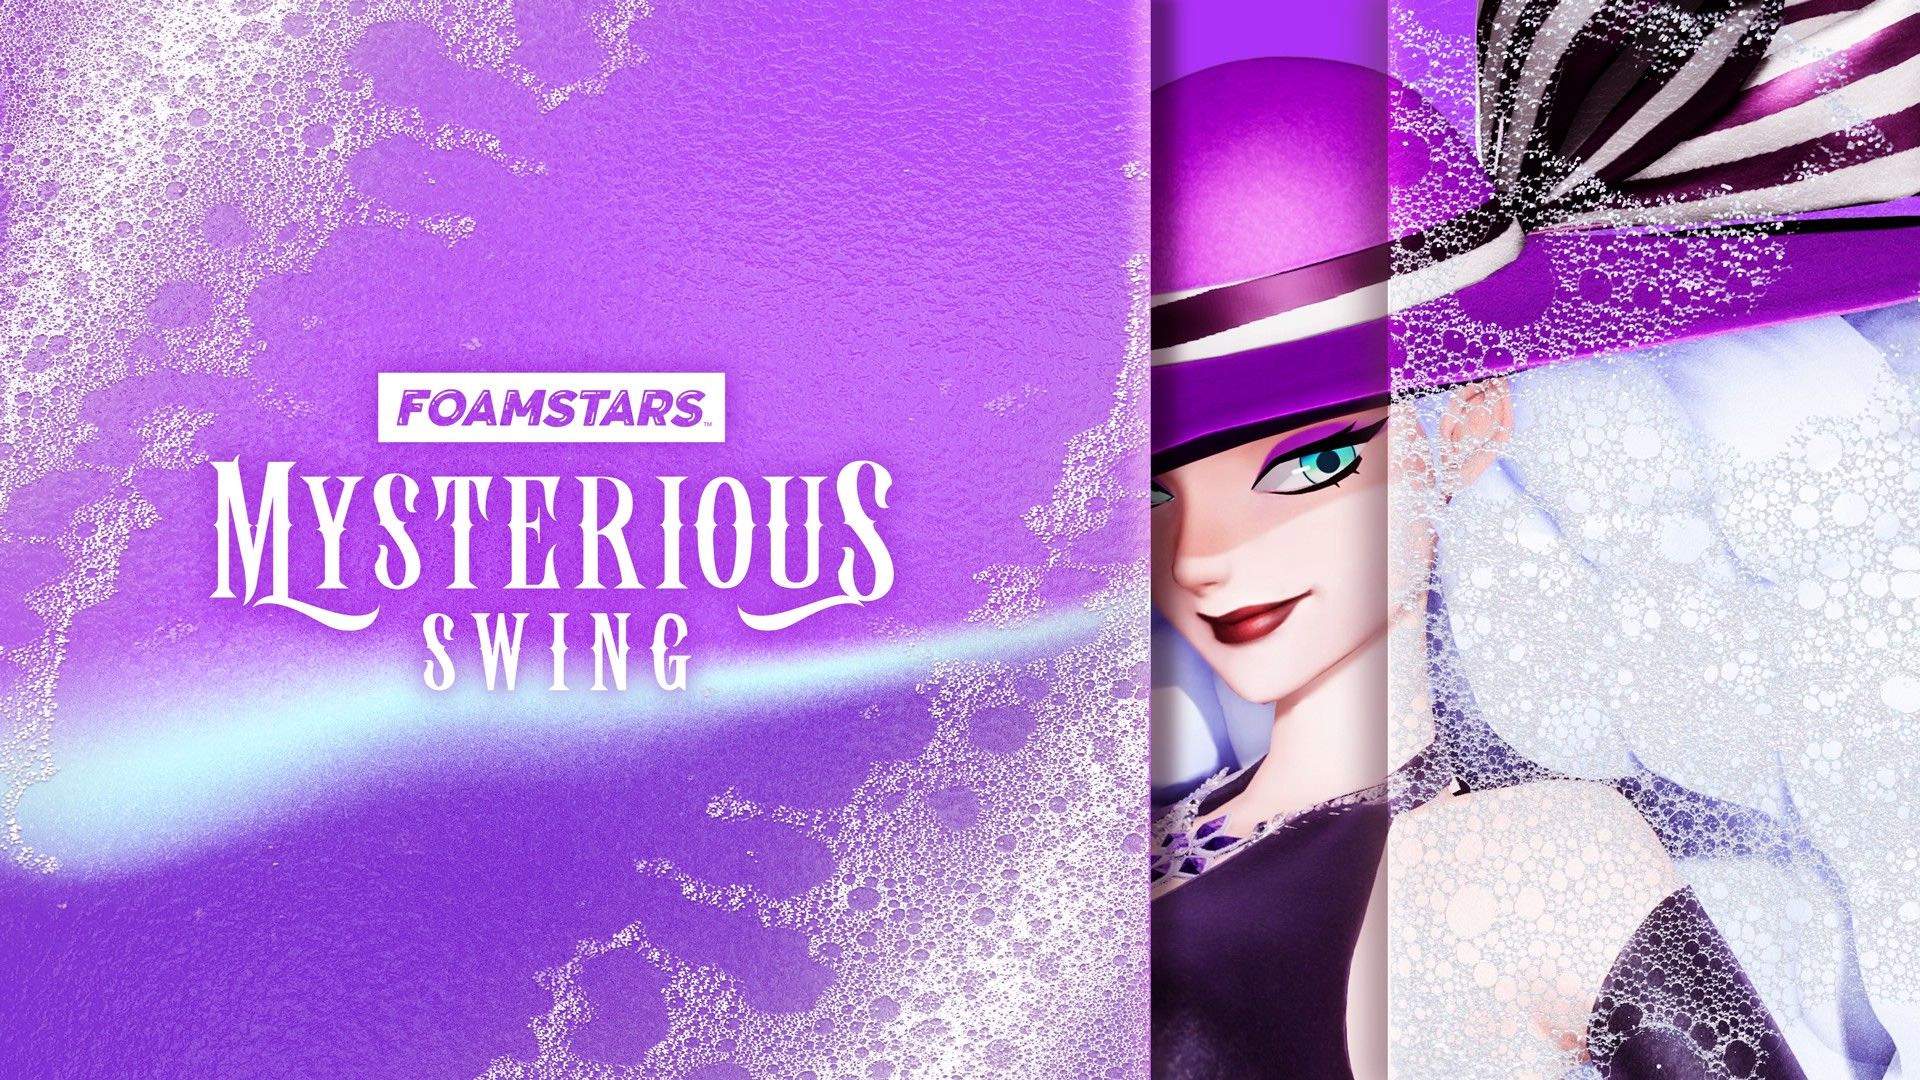 Square Enix Launches New Foamstars Season – “Mysterious Swing”